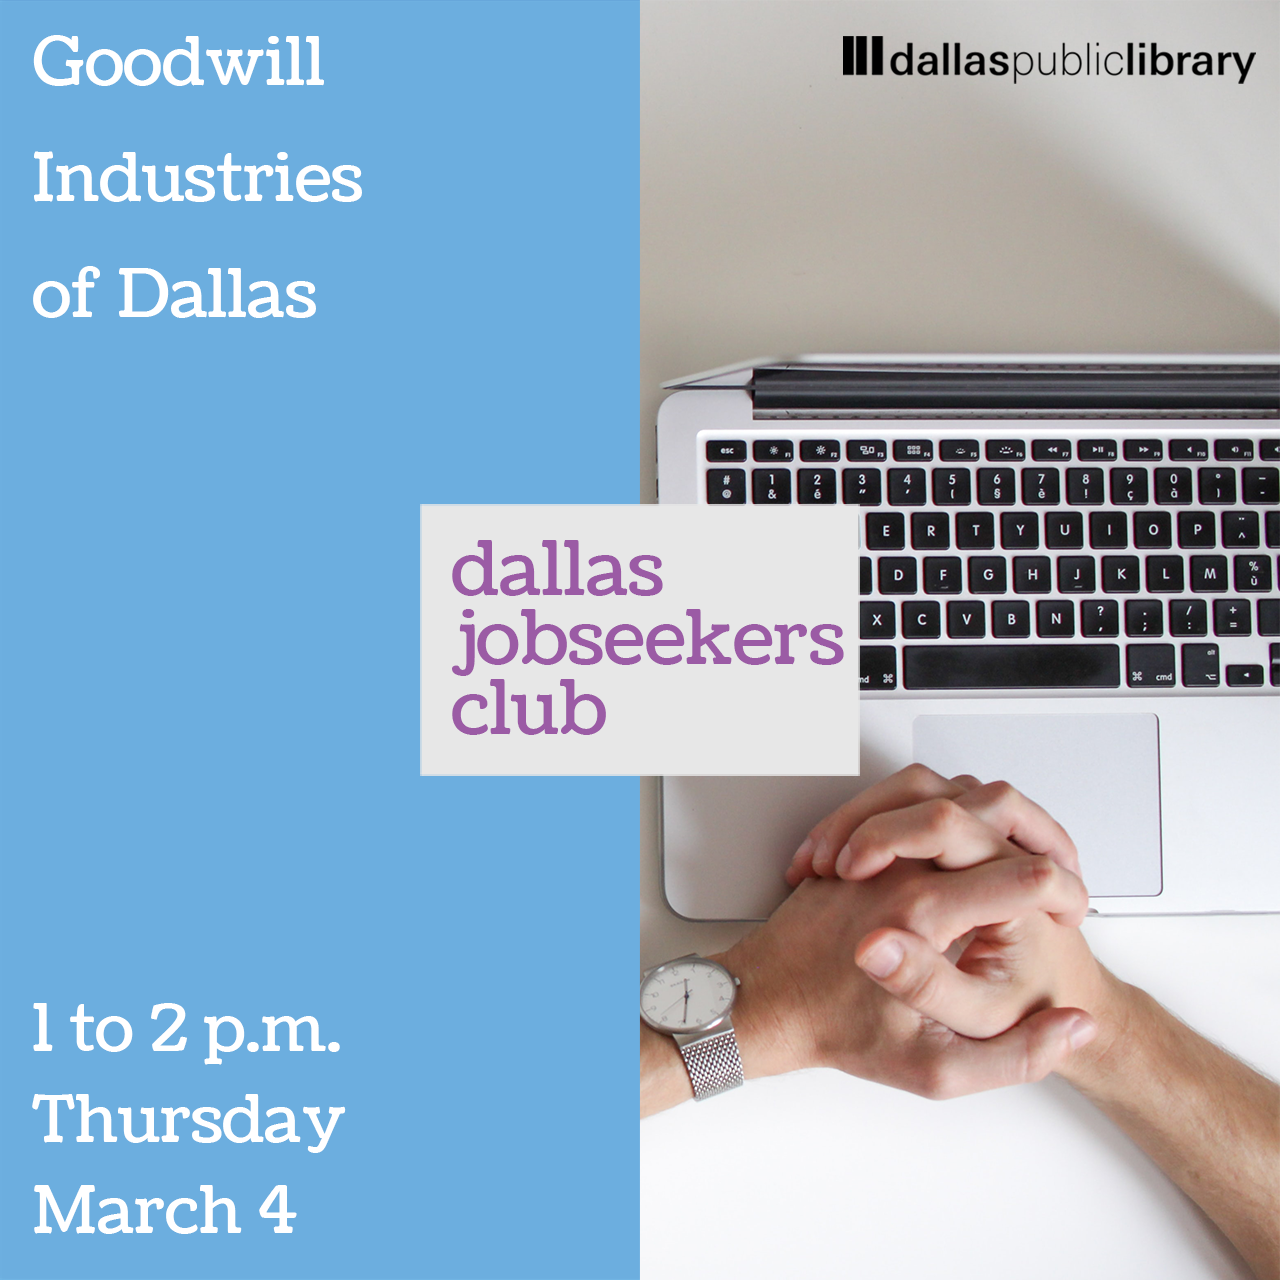 Dallas Jobseekers Club with Goodwill Industries of Dallas